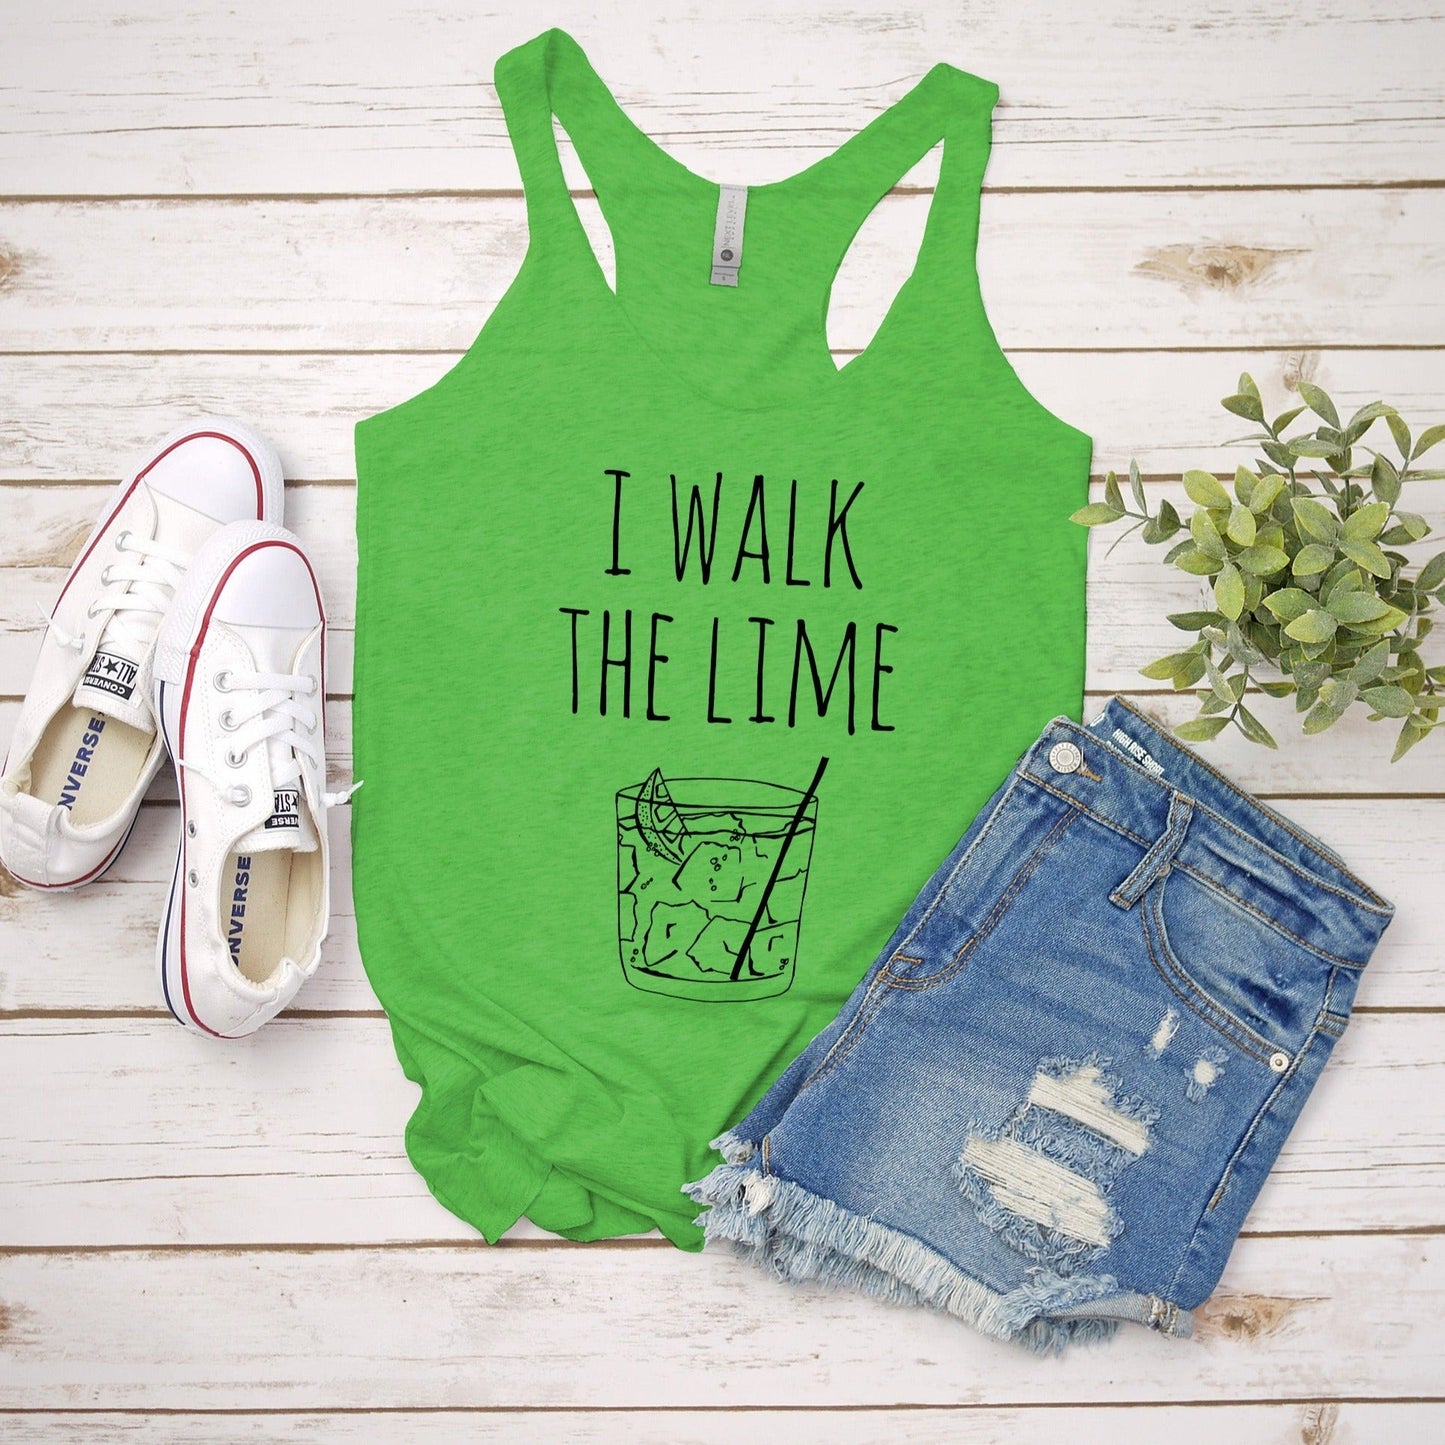 I Walk The Lime - Women's Tank - Heather Gray, Tahiti, or Envy